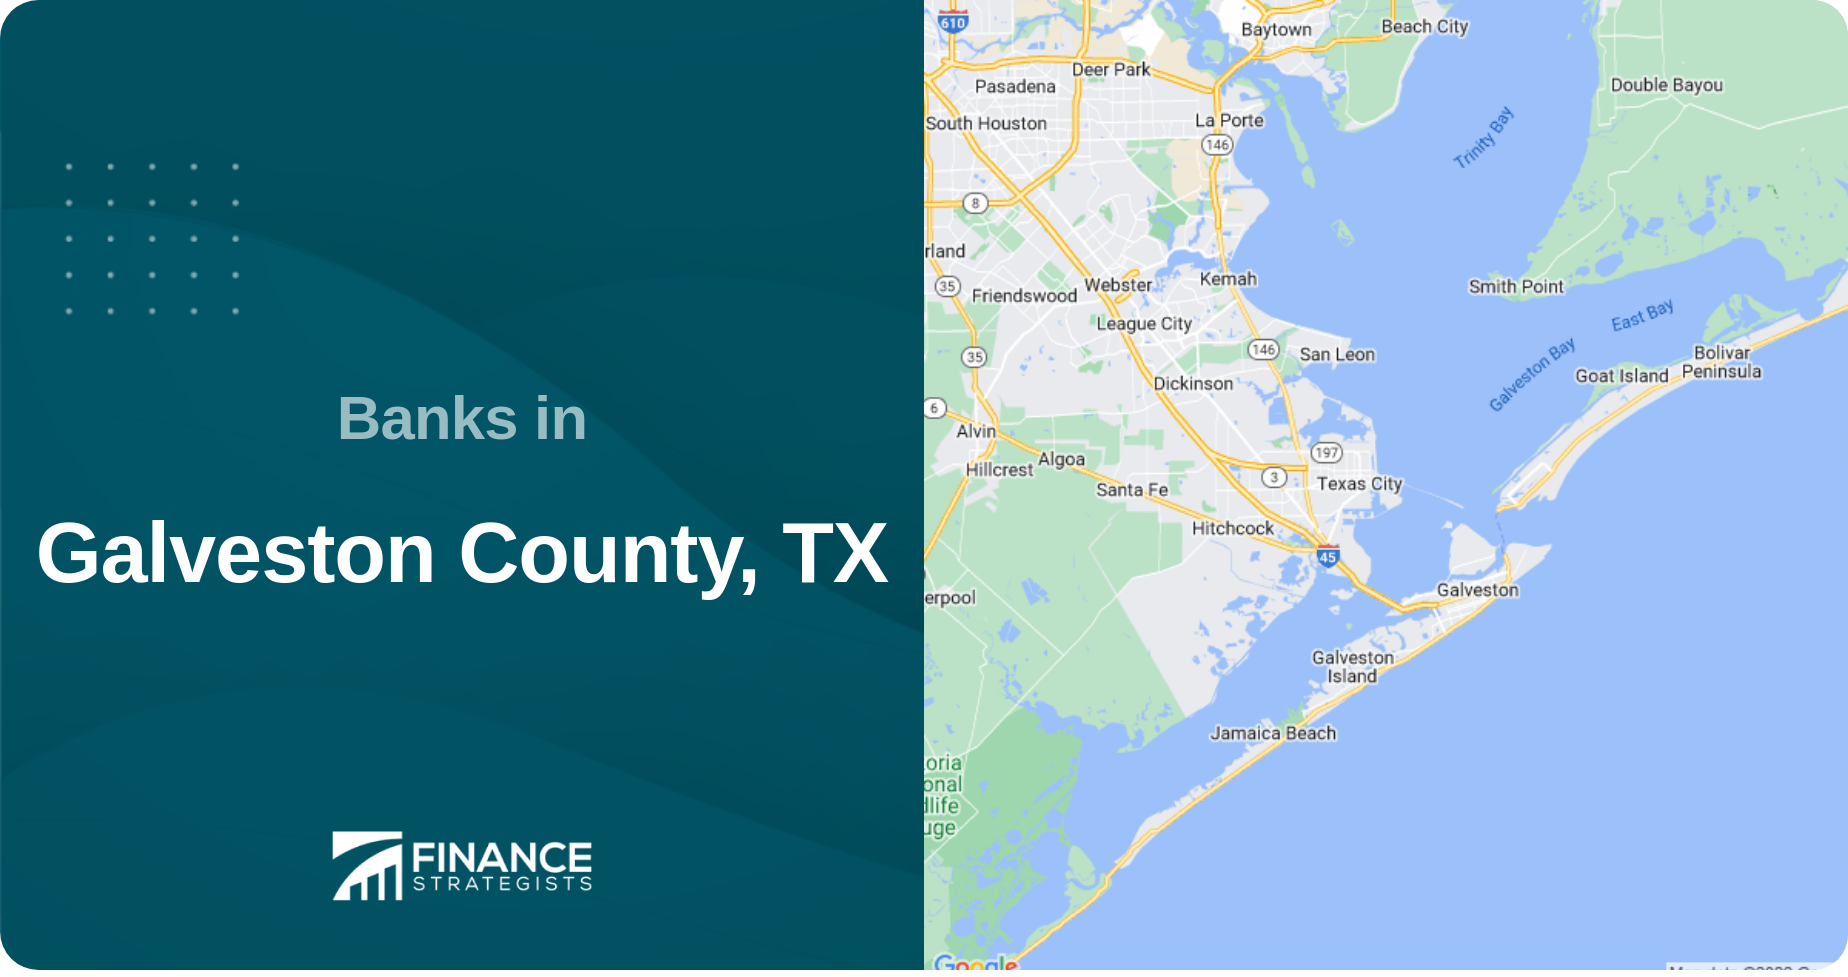 Banks in Galveston County, TX